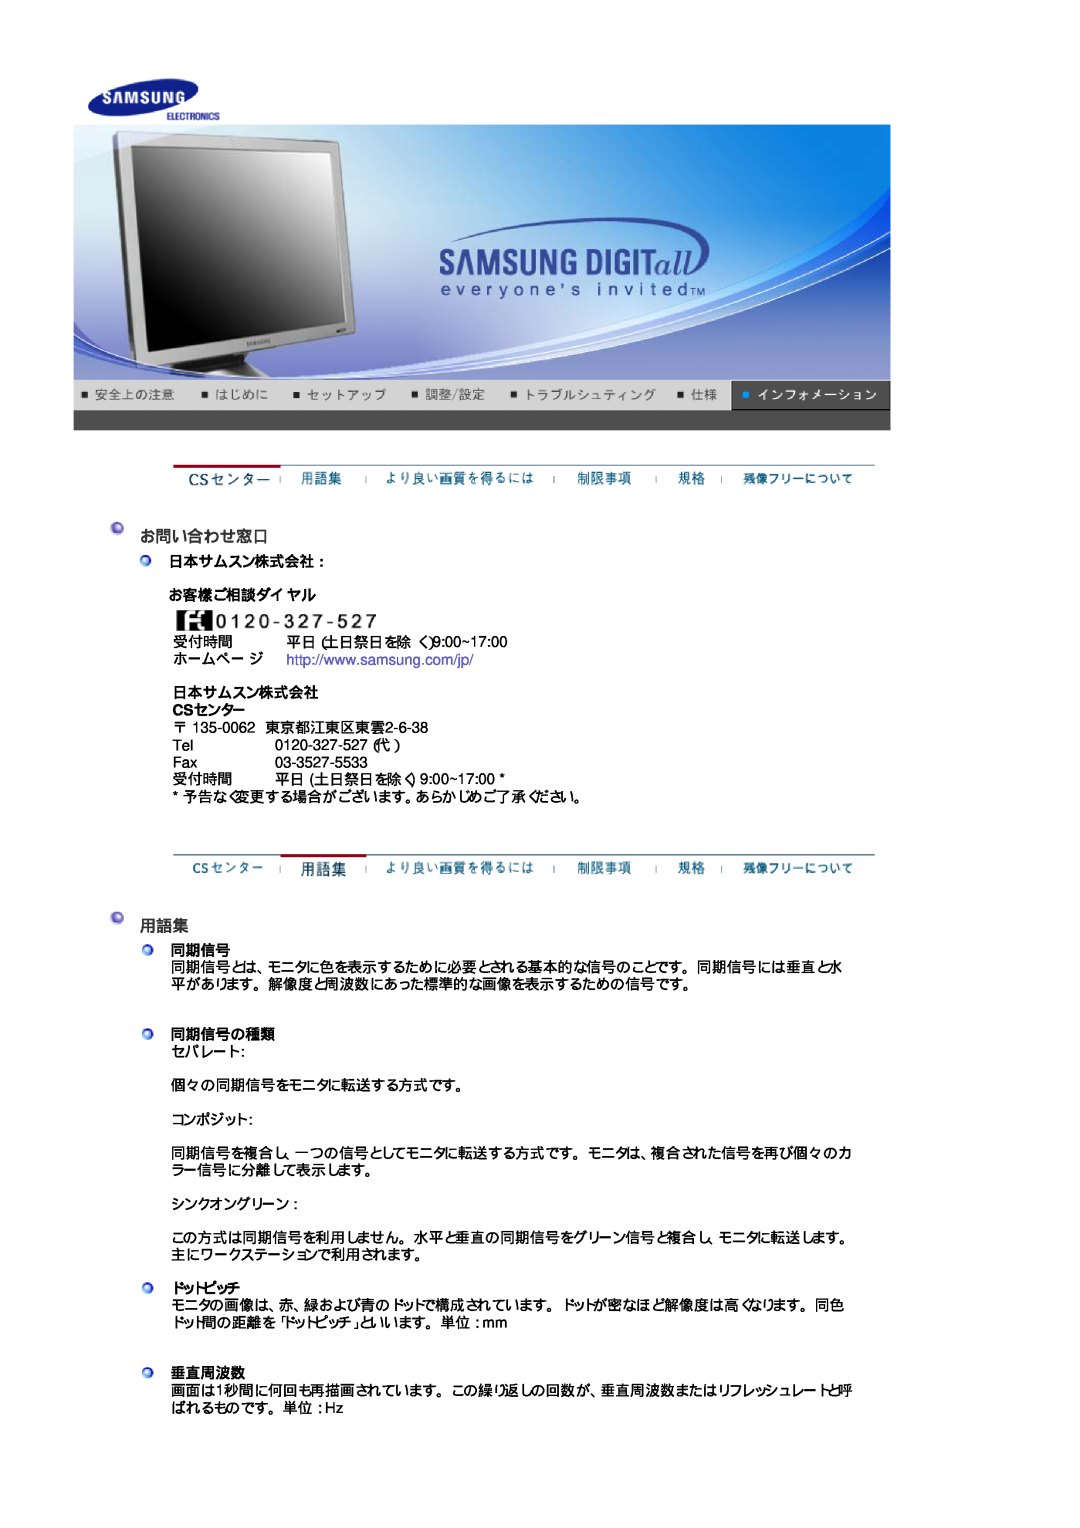 Samsung LS19CIBQS1/XSJ, LS19CIBQSV/XSJ, LS17CIBQS1/XSJ manual お問い合わせ窓口, 日本サムスン株式会社 お客樣ご相談ダイ ヤル, 同期信号の種類, ドットピッチ, 垂直周波数 